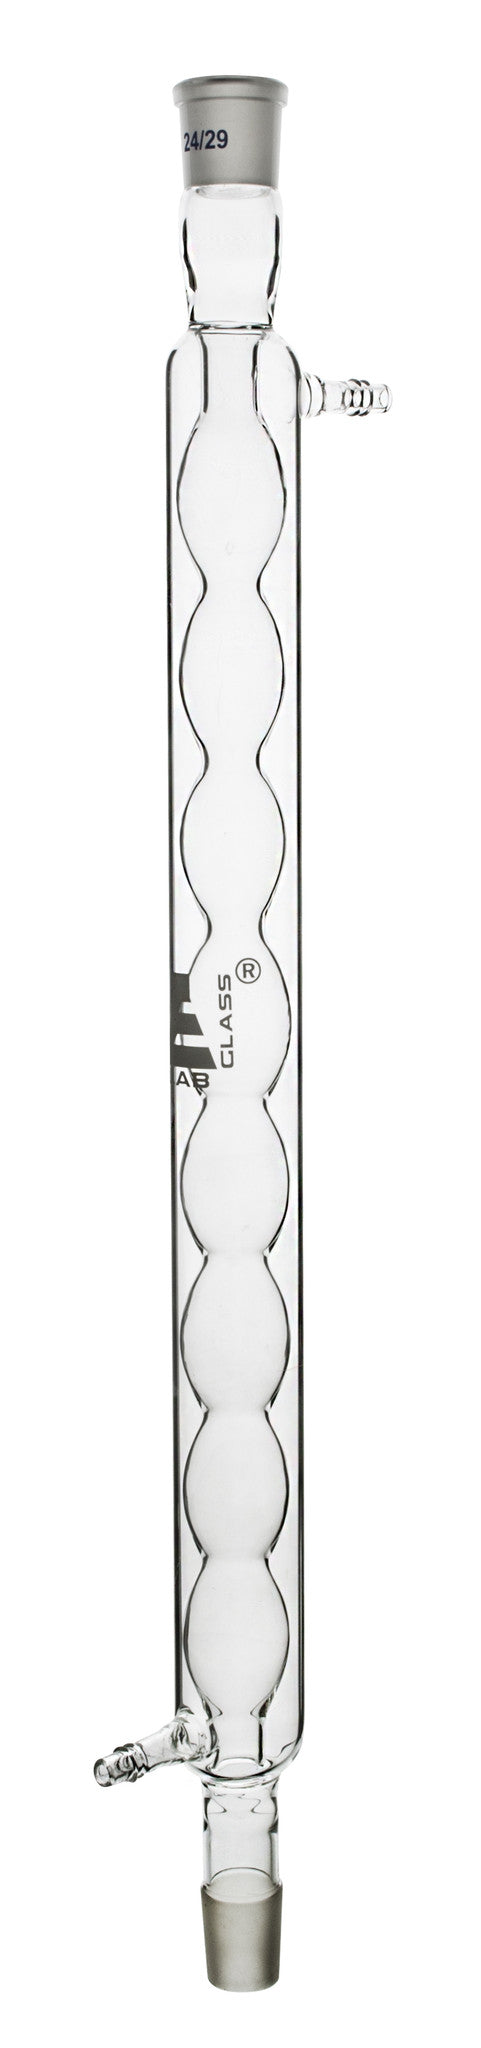 Condenser - Allihn Bulb, Socket size 24/29 & Cone size 24/29, effective length 40mm